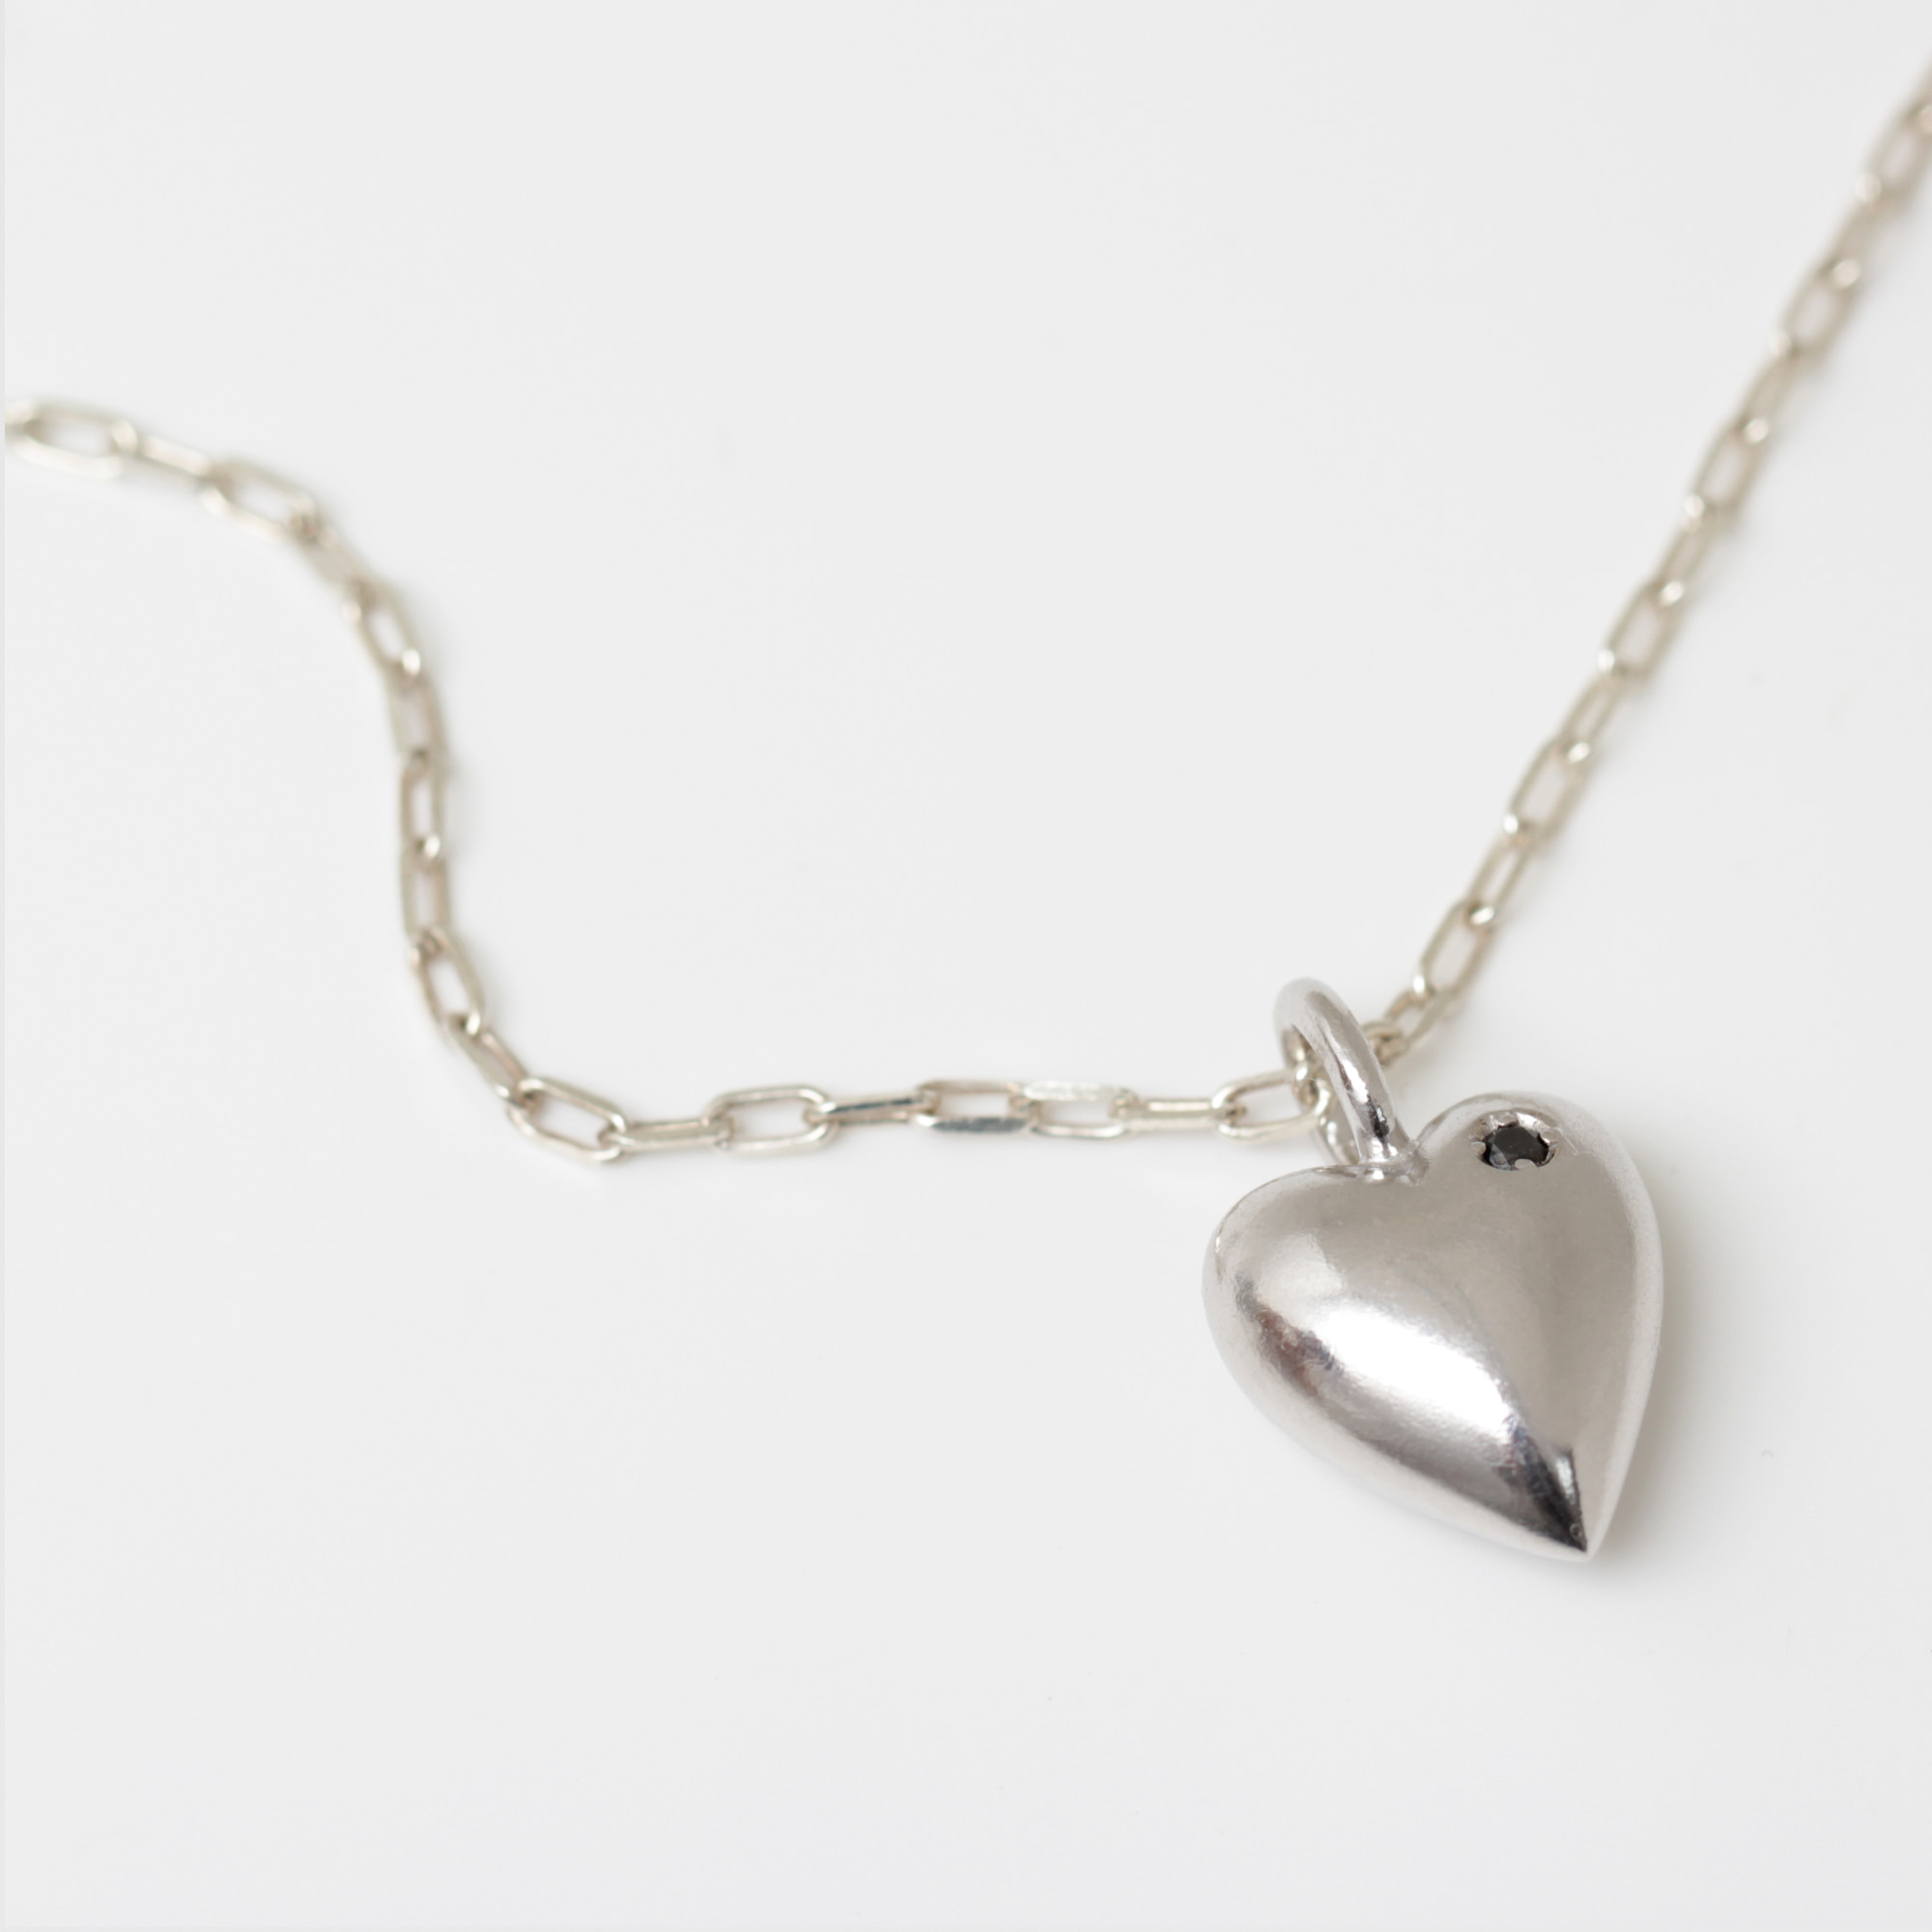 Black diamond heart necklace